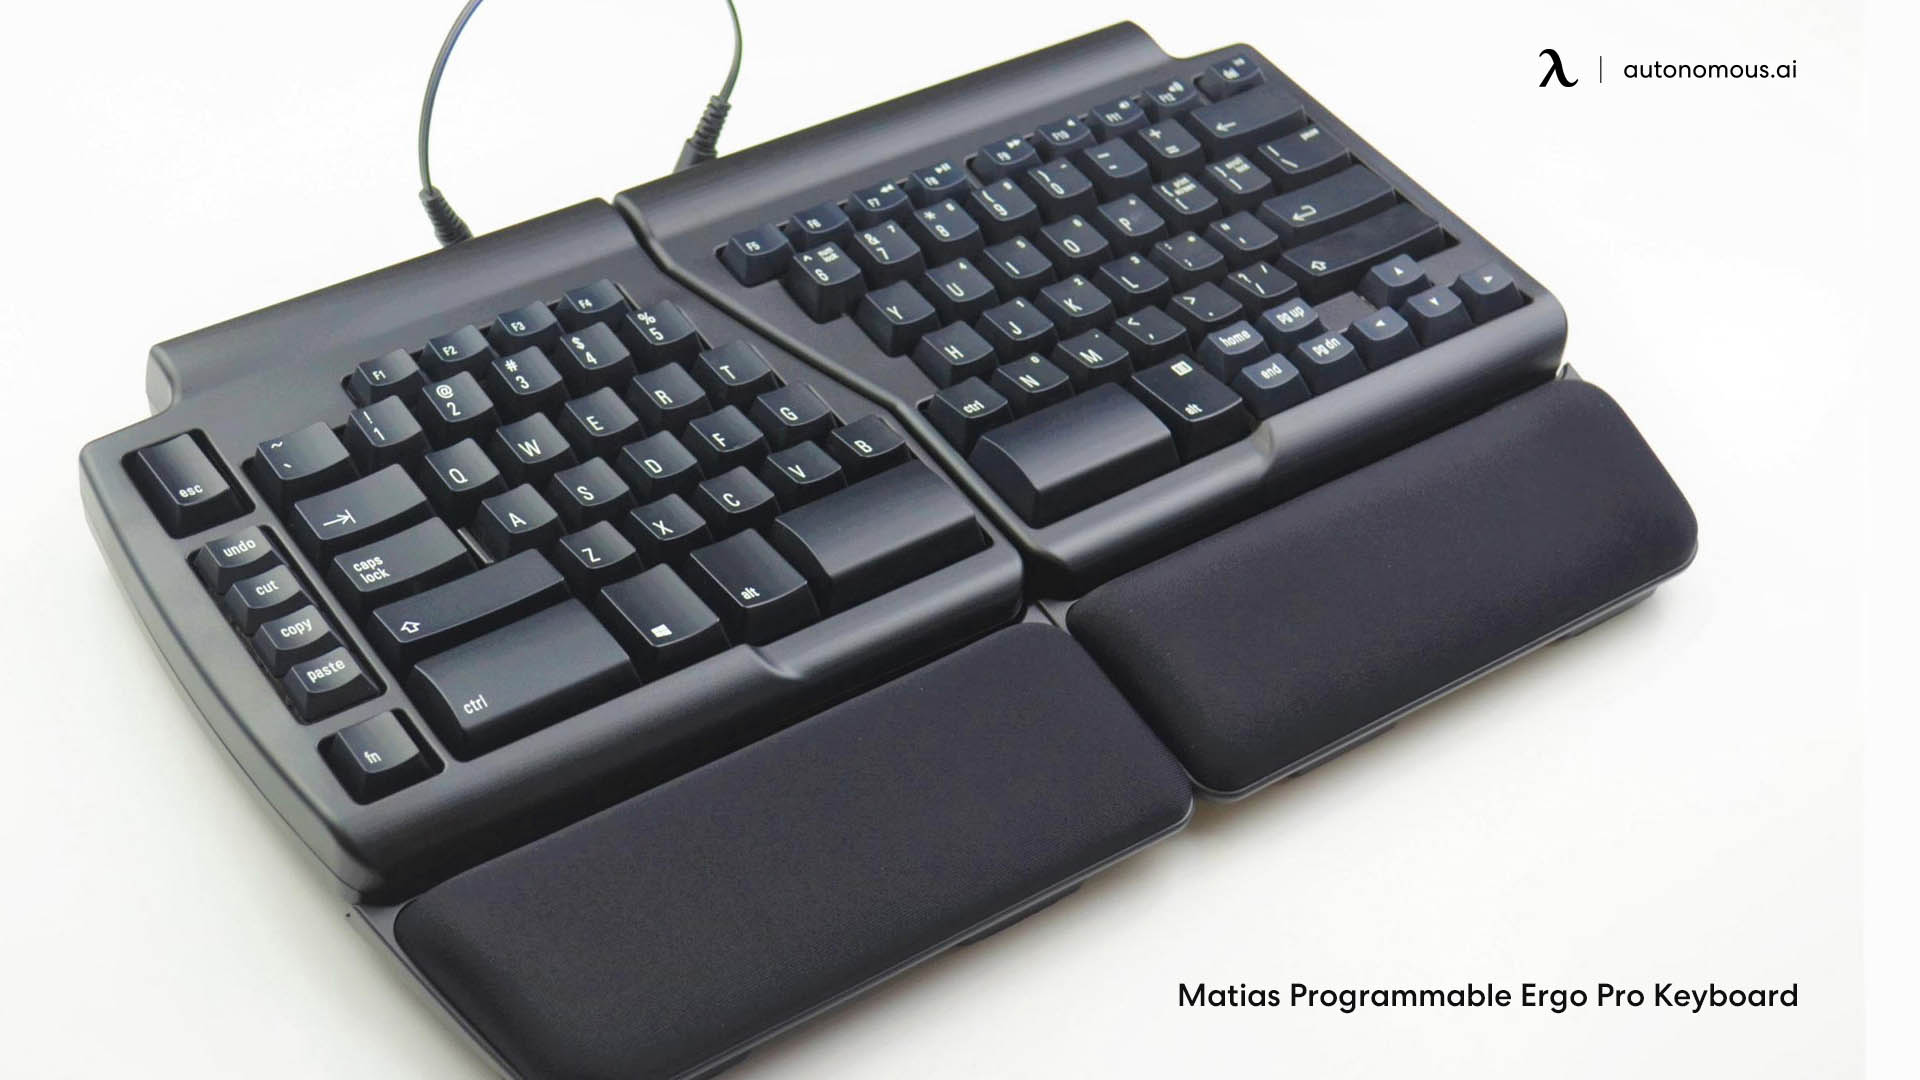 Ergonomic Keyboard for PC by Matias